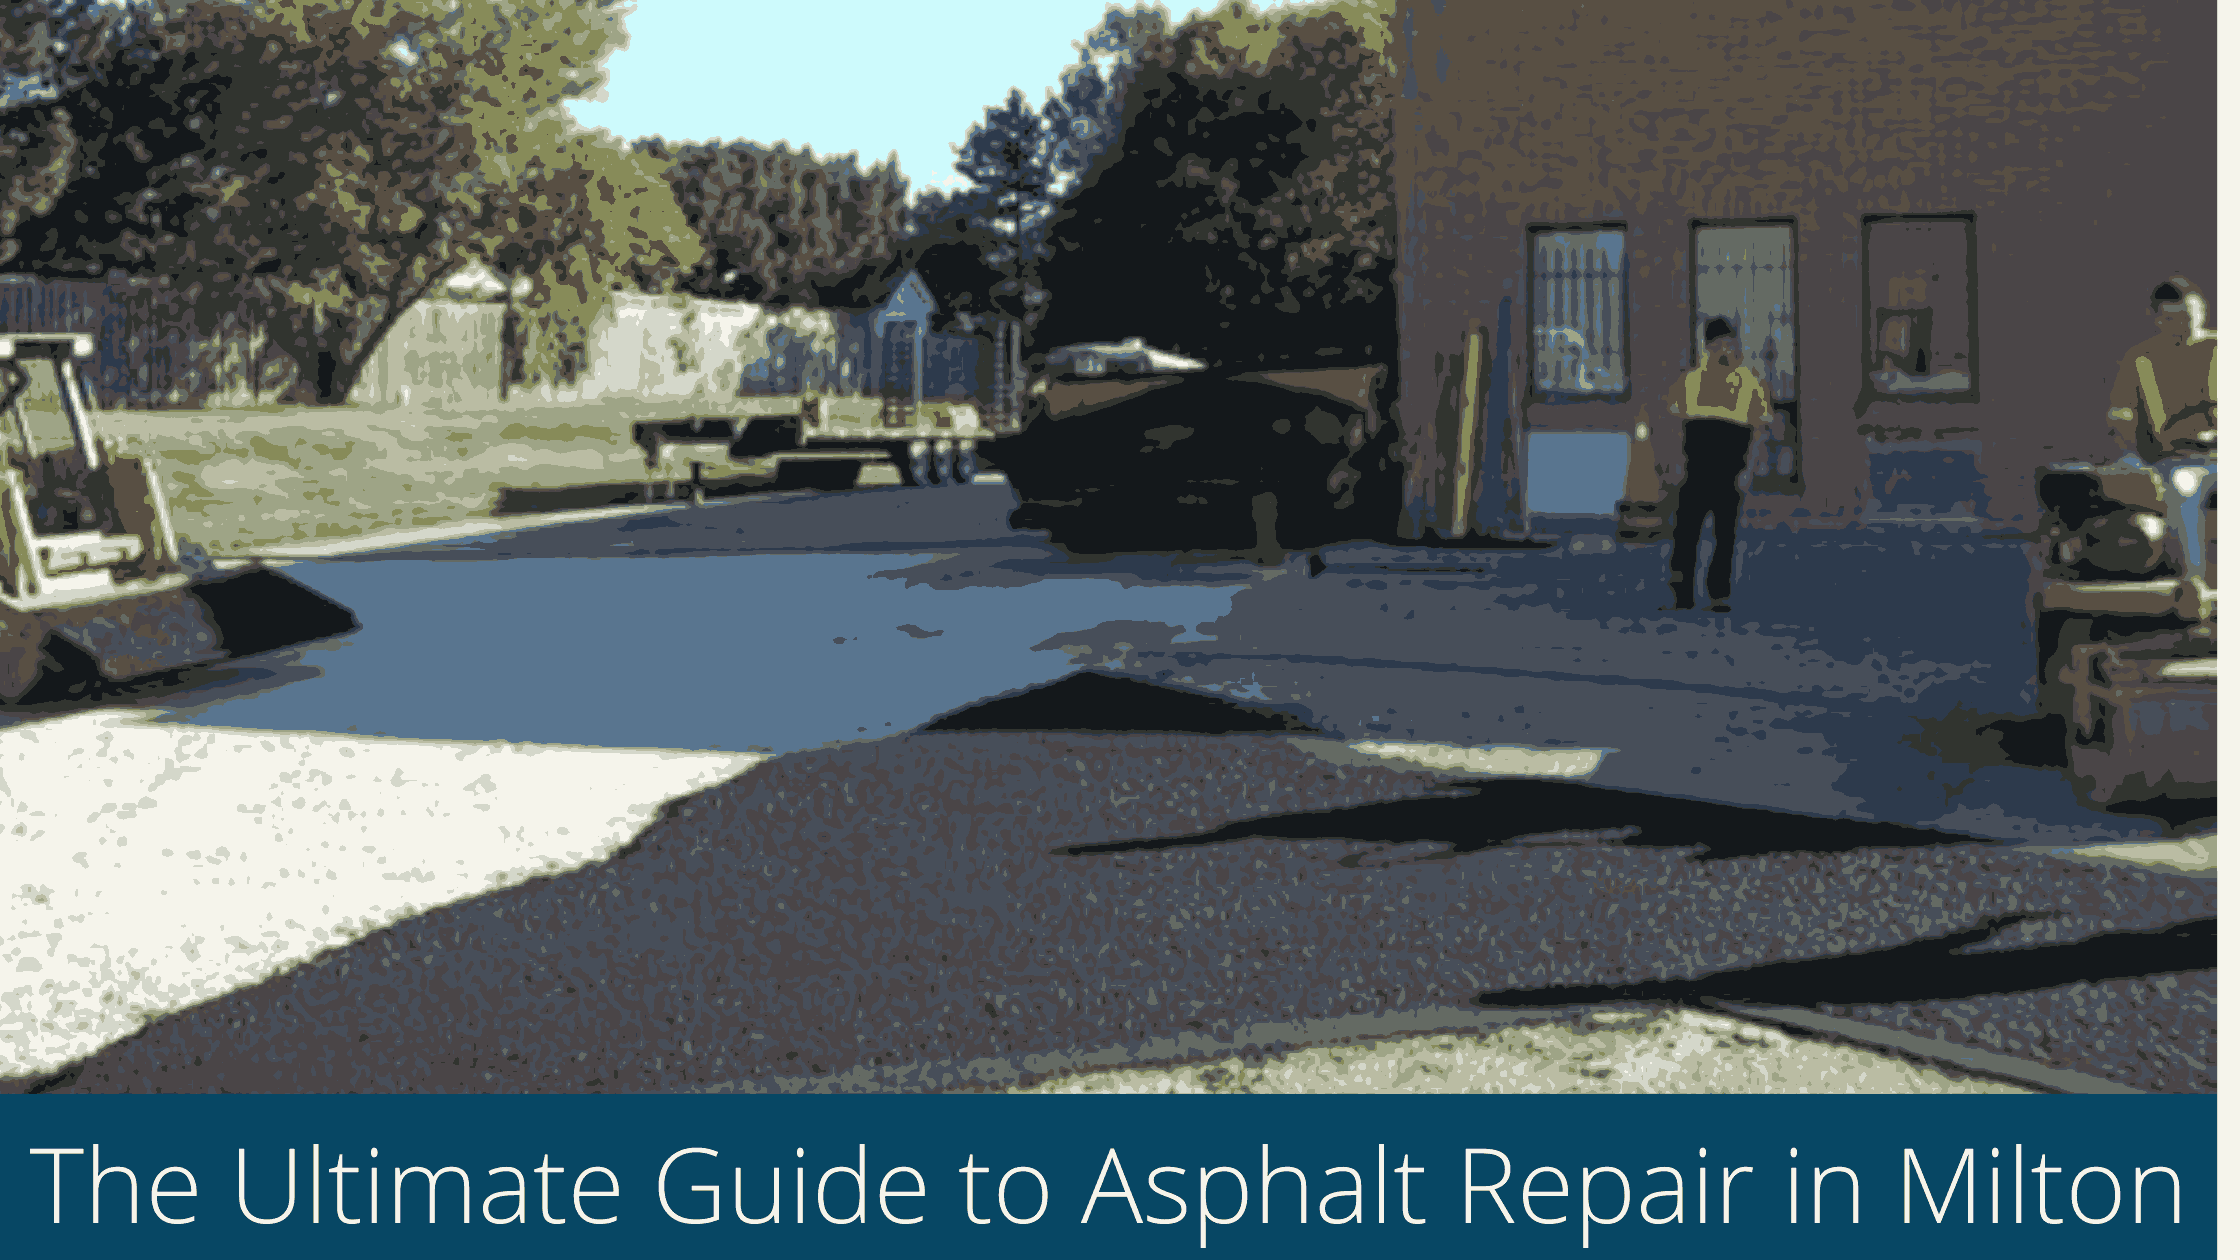 The Ultimate Guide to Asphalt Repair in Milton